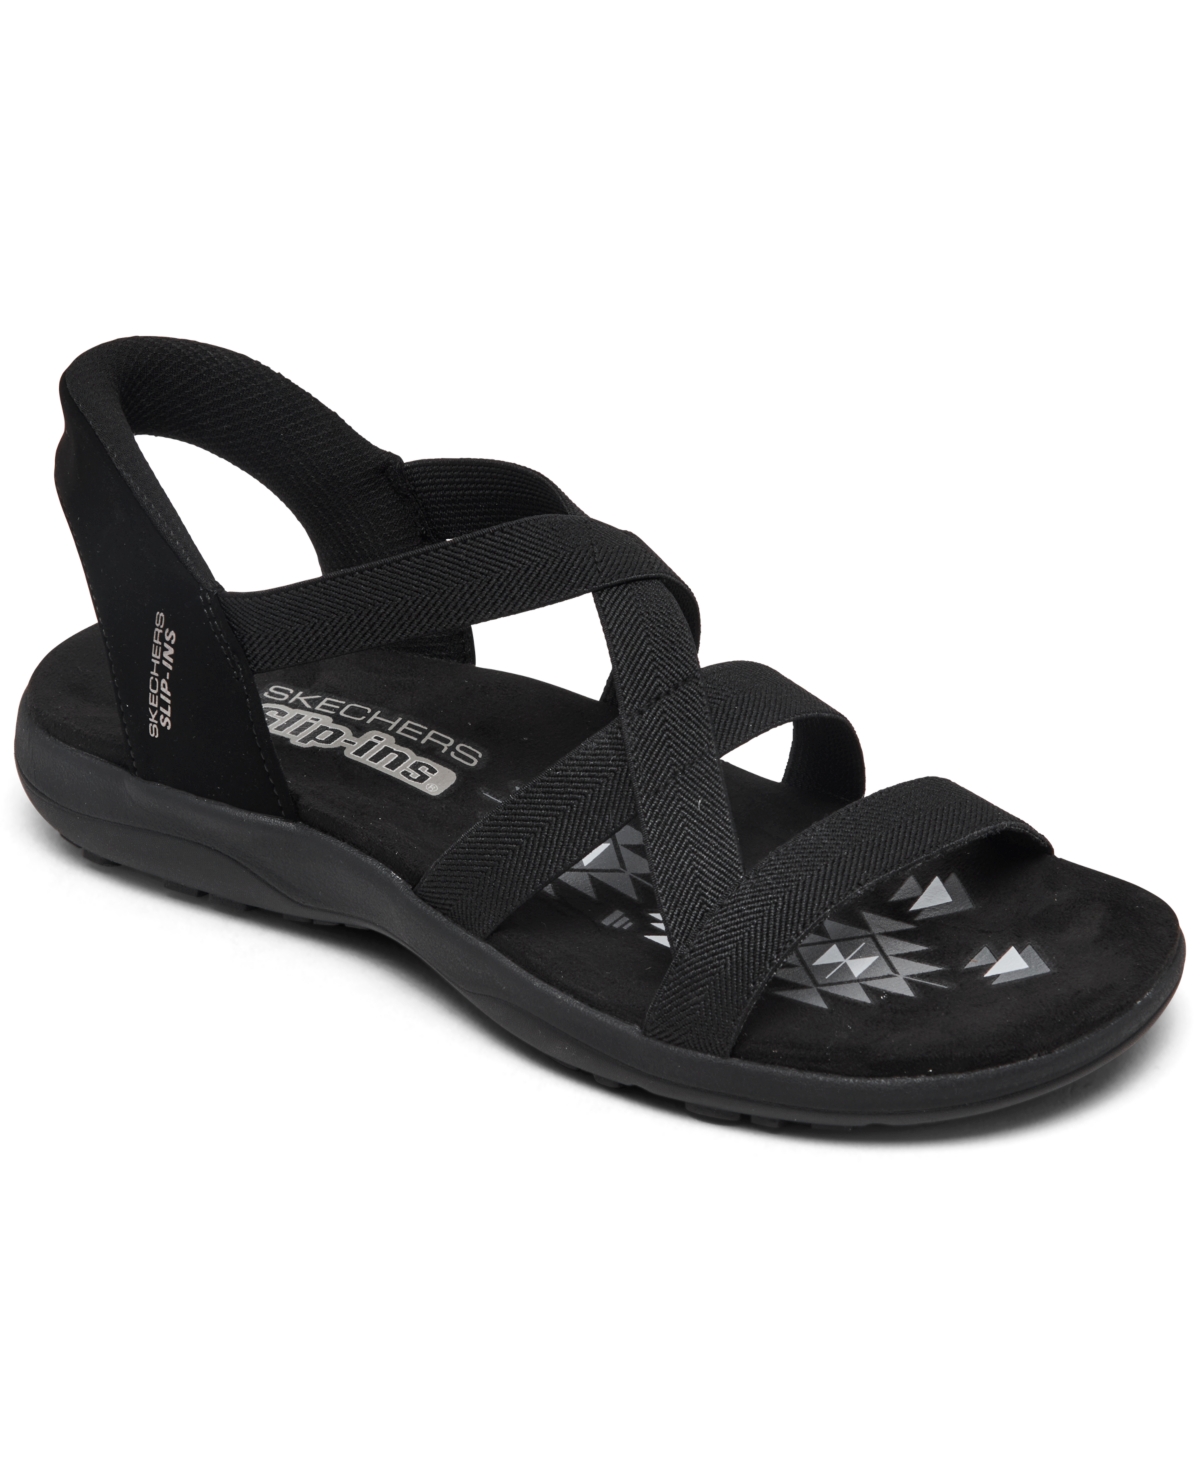 Women's Slip-ins: Reggae Slim - Stretch Flex Athletic Walking Sandals from Finish Line - Black/Black